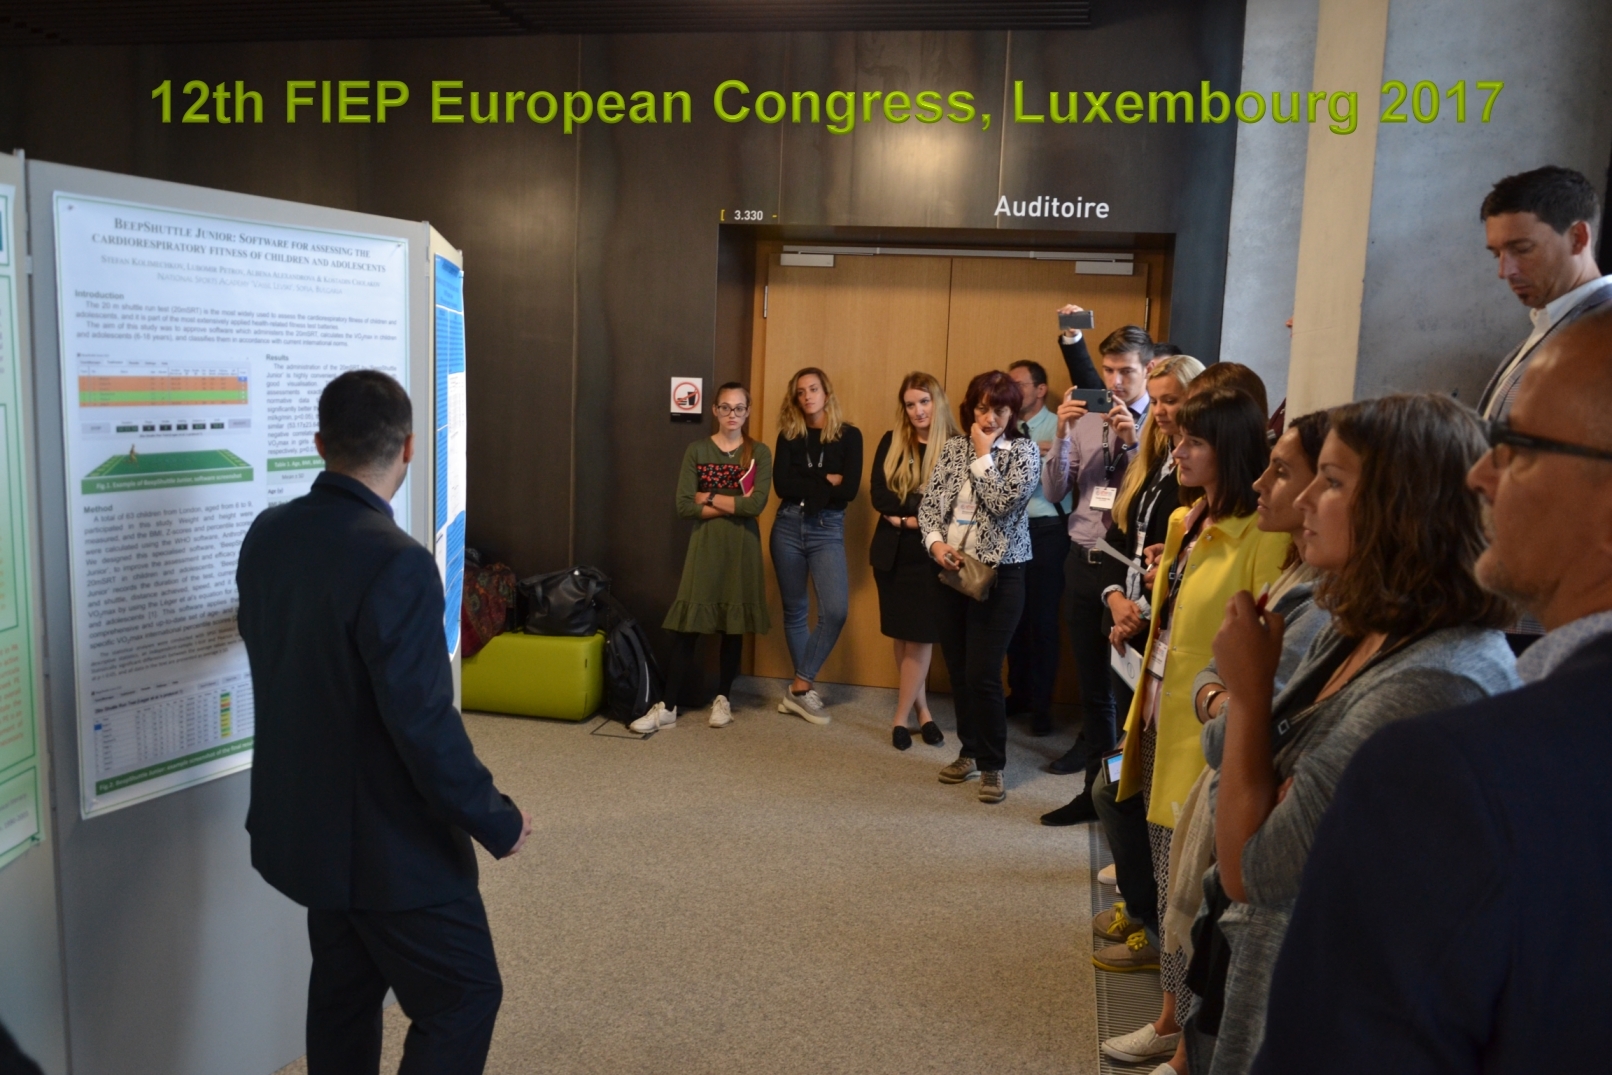 12th FIEP European Congress in Luxembourg